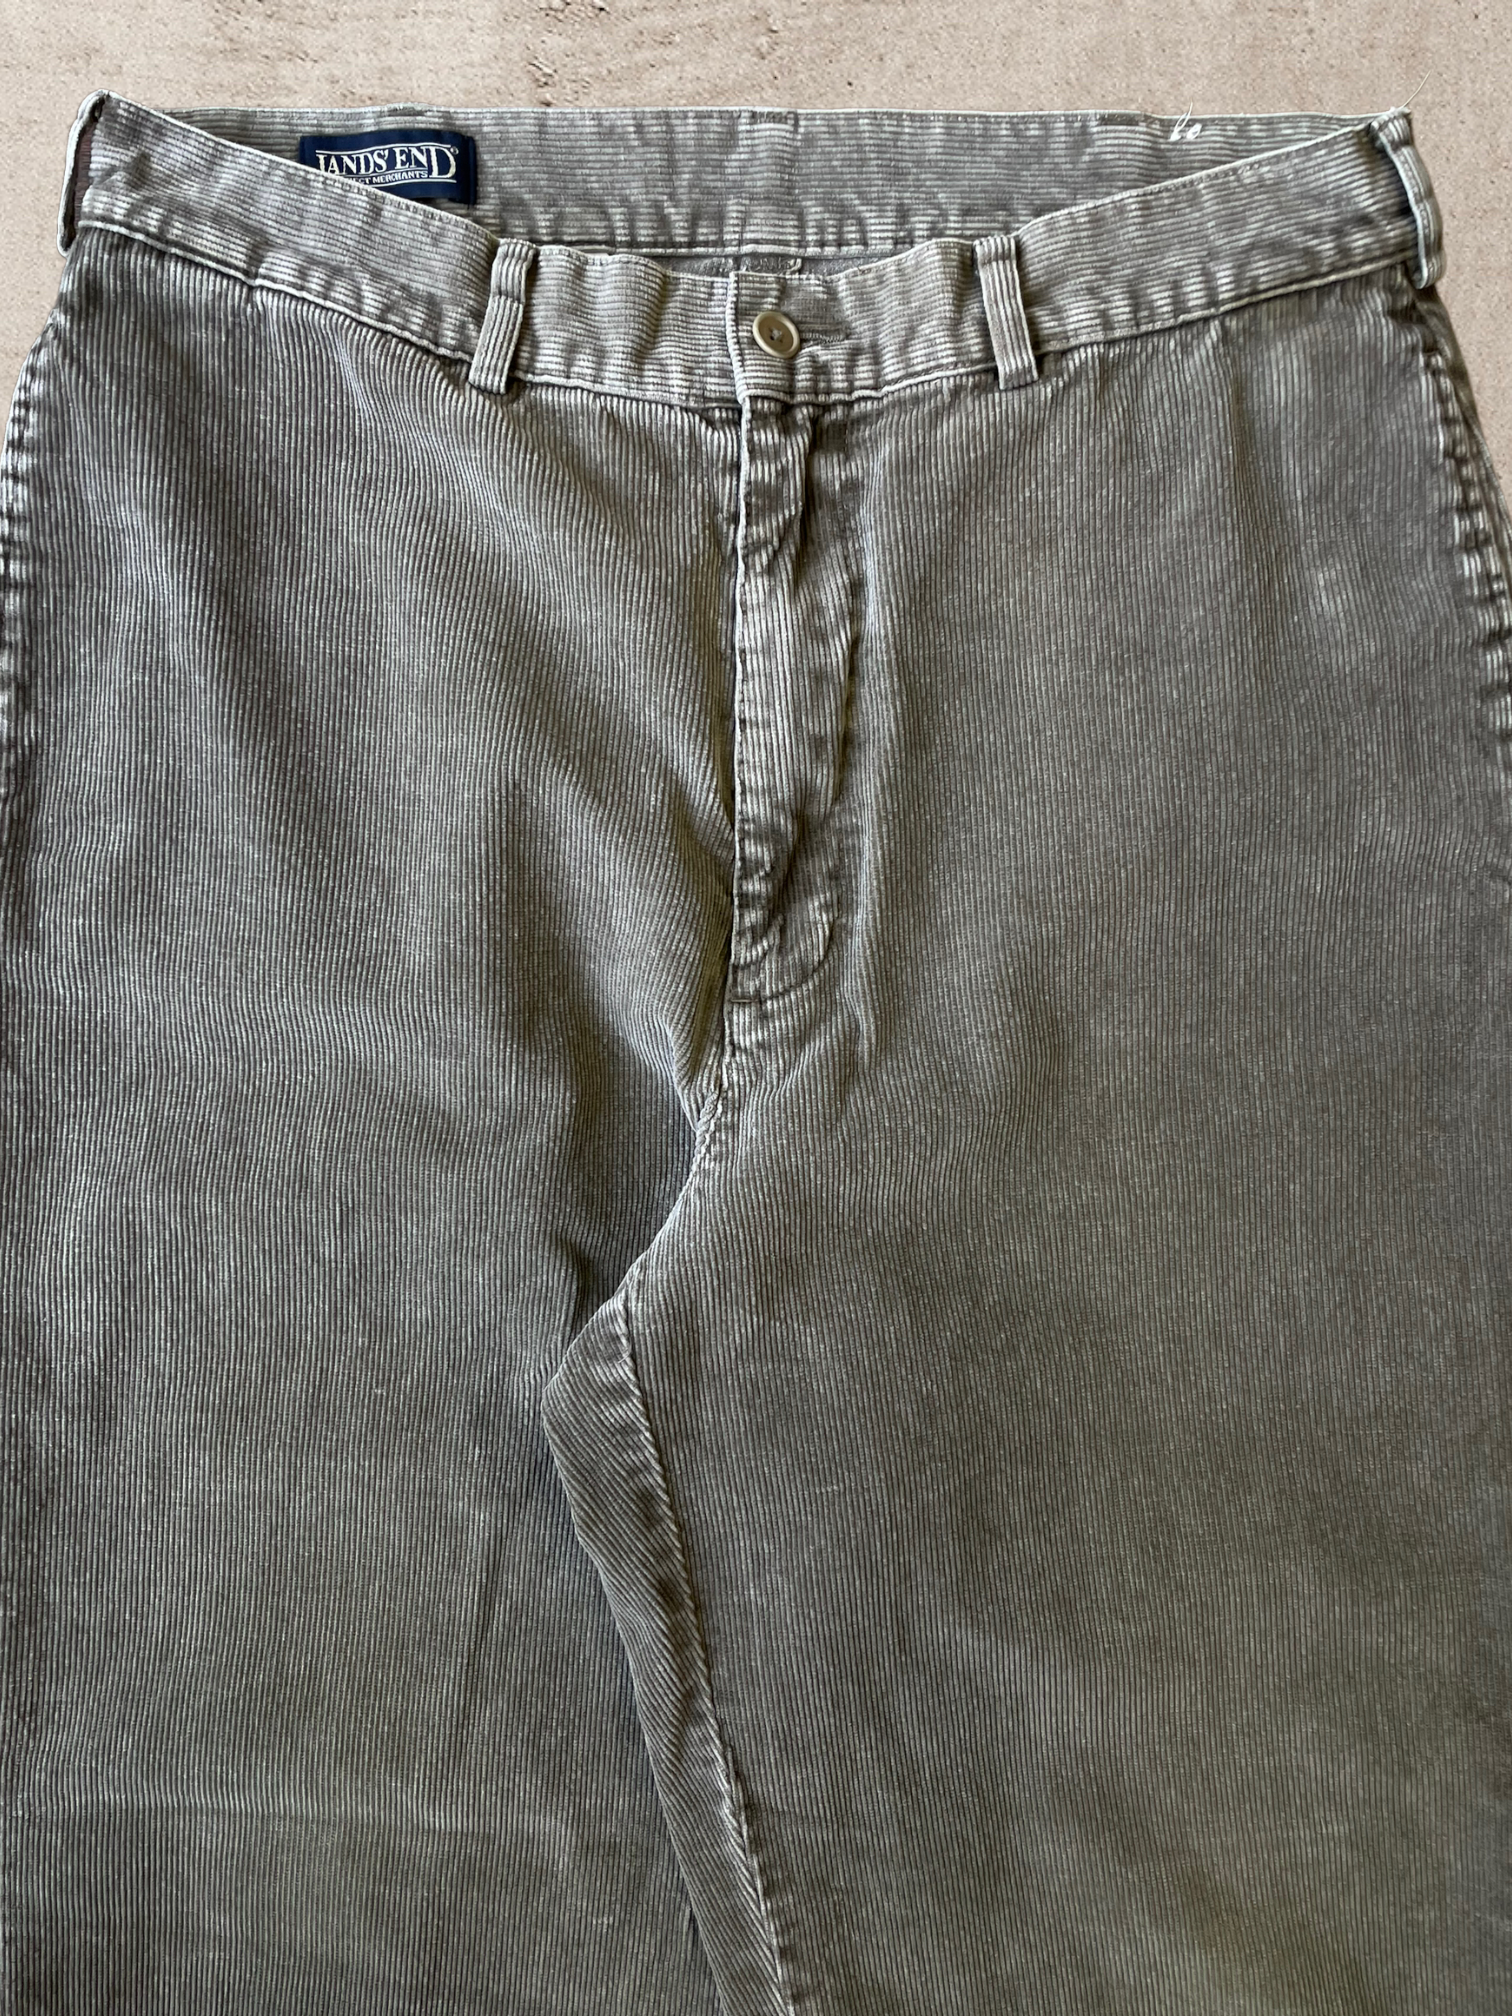 90s Corduroy Brown Pants -32x30